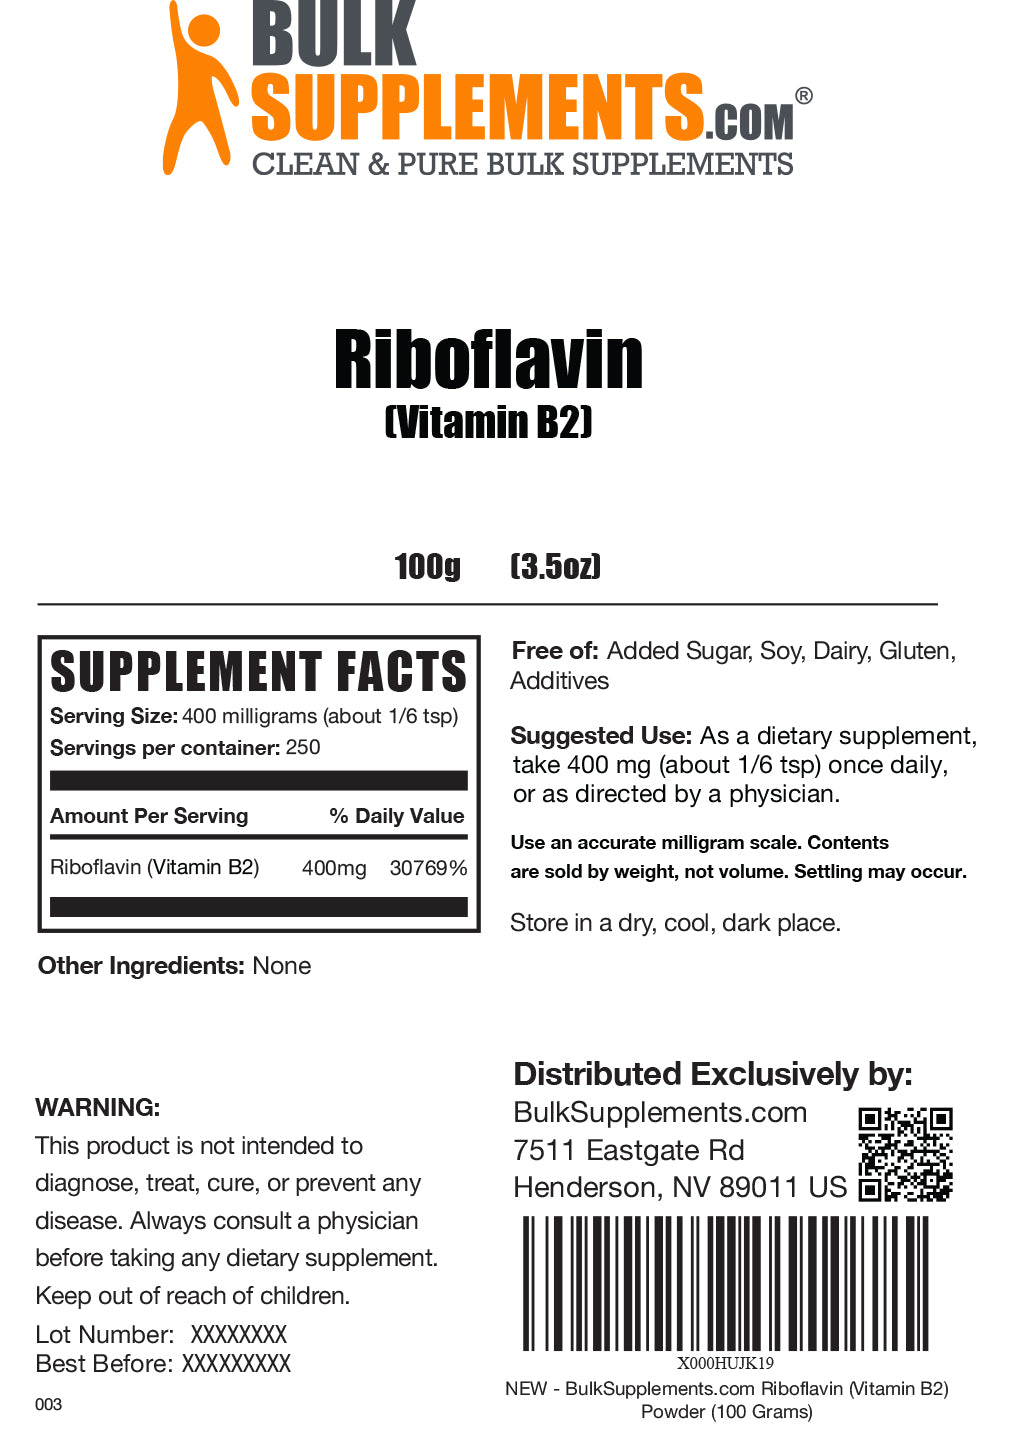 Riboflavin (Vitamin B2) powder label 100g